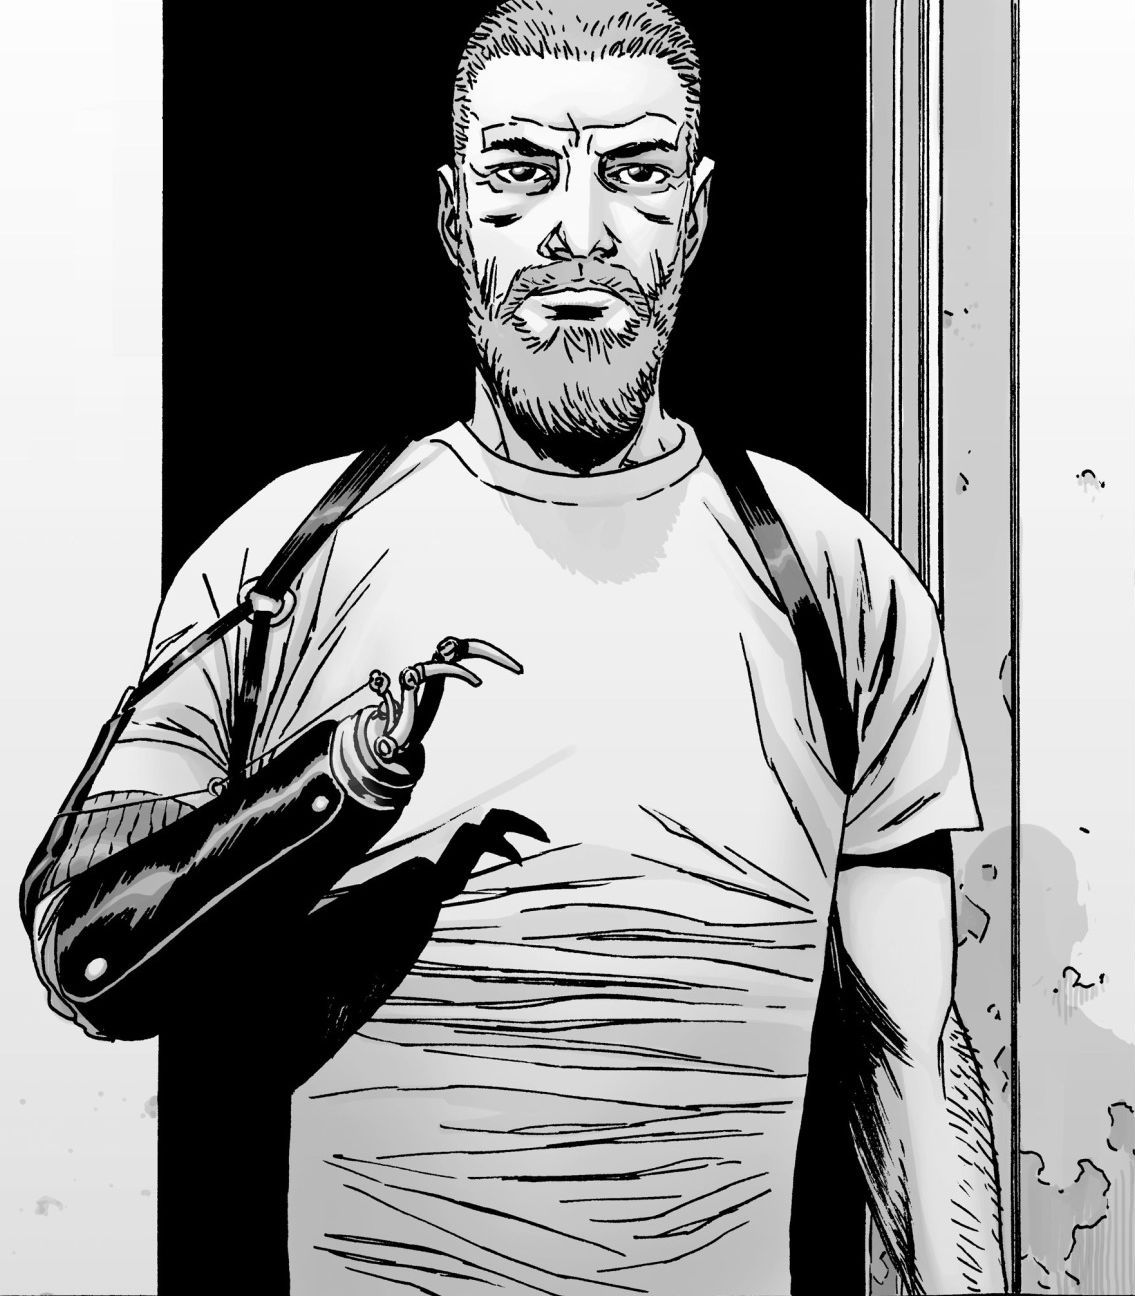 Rick Grimes in The Walking Dead comics